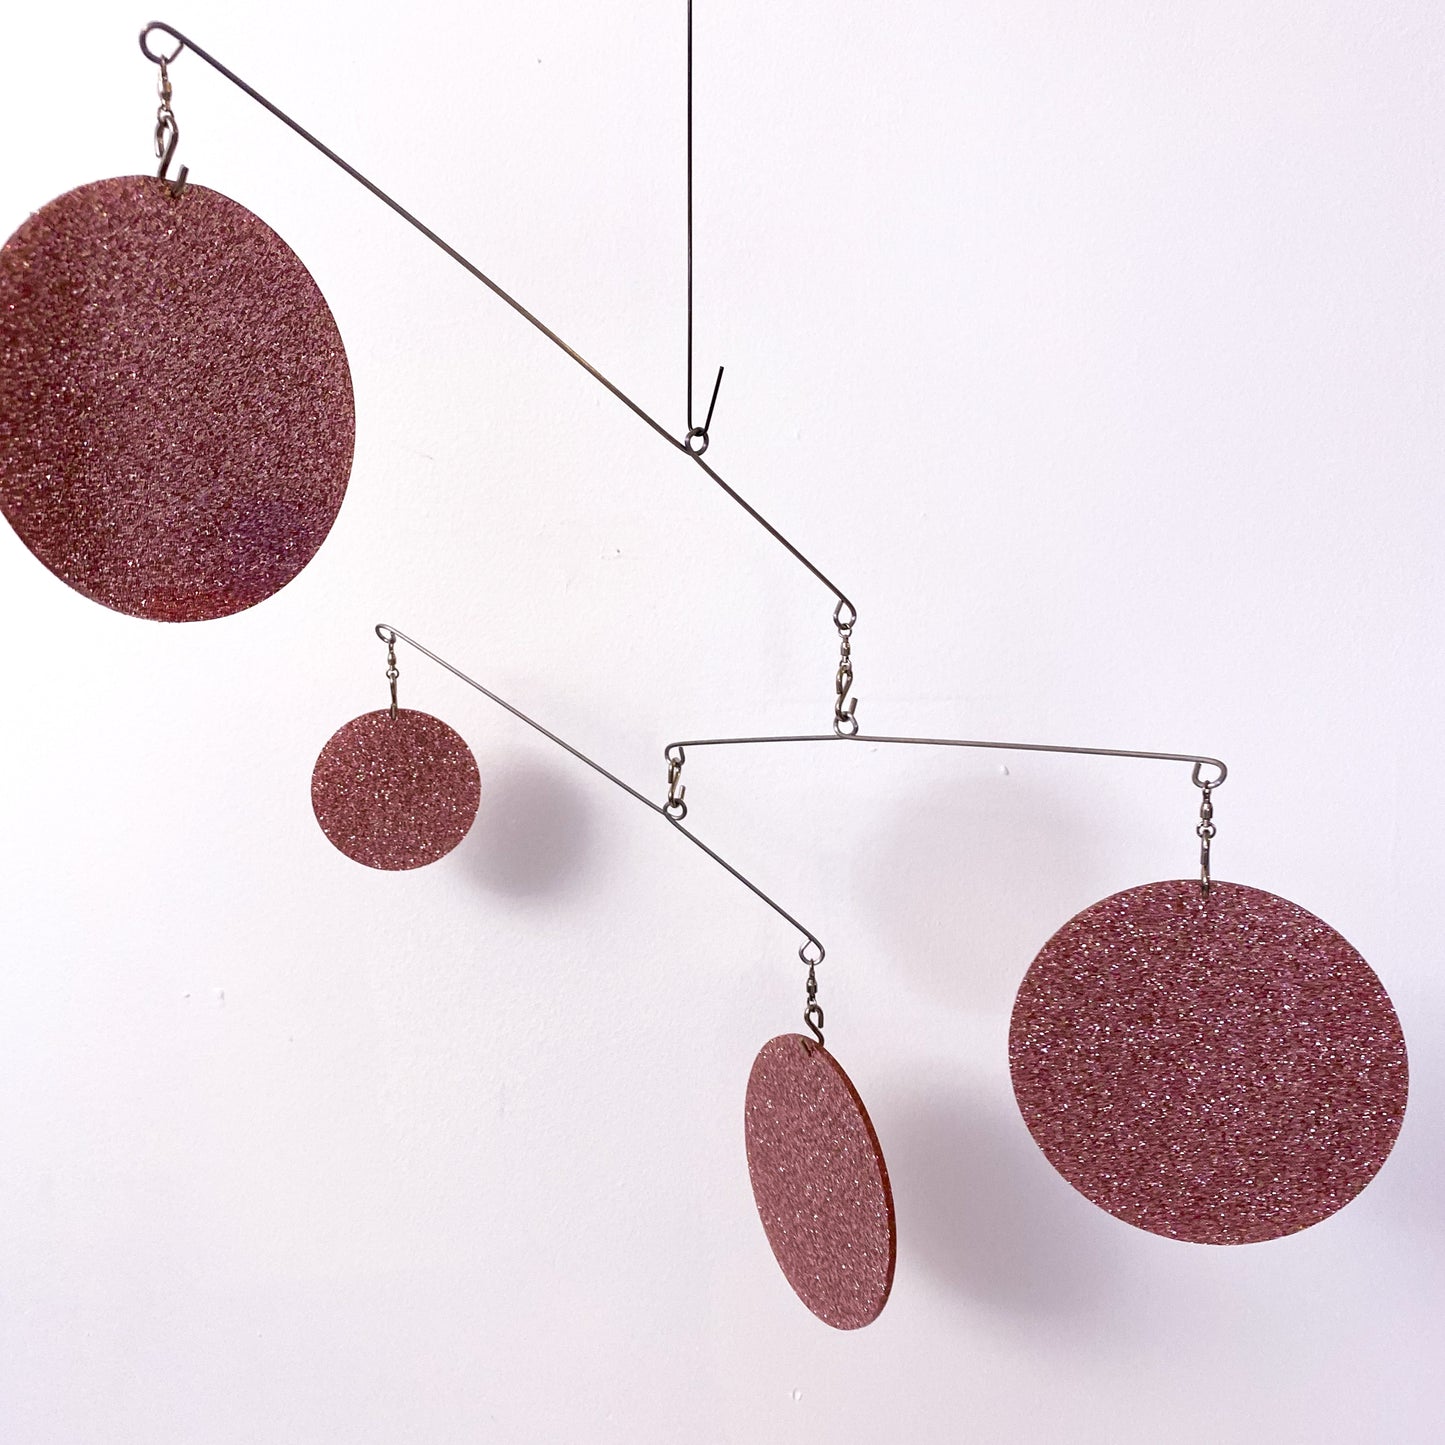 Gorgeous Rose Gold Atomic Mobile DIY Kit - kinetic hanging art by AtomicMobiles.com